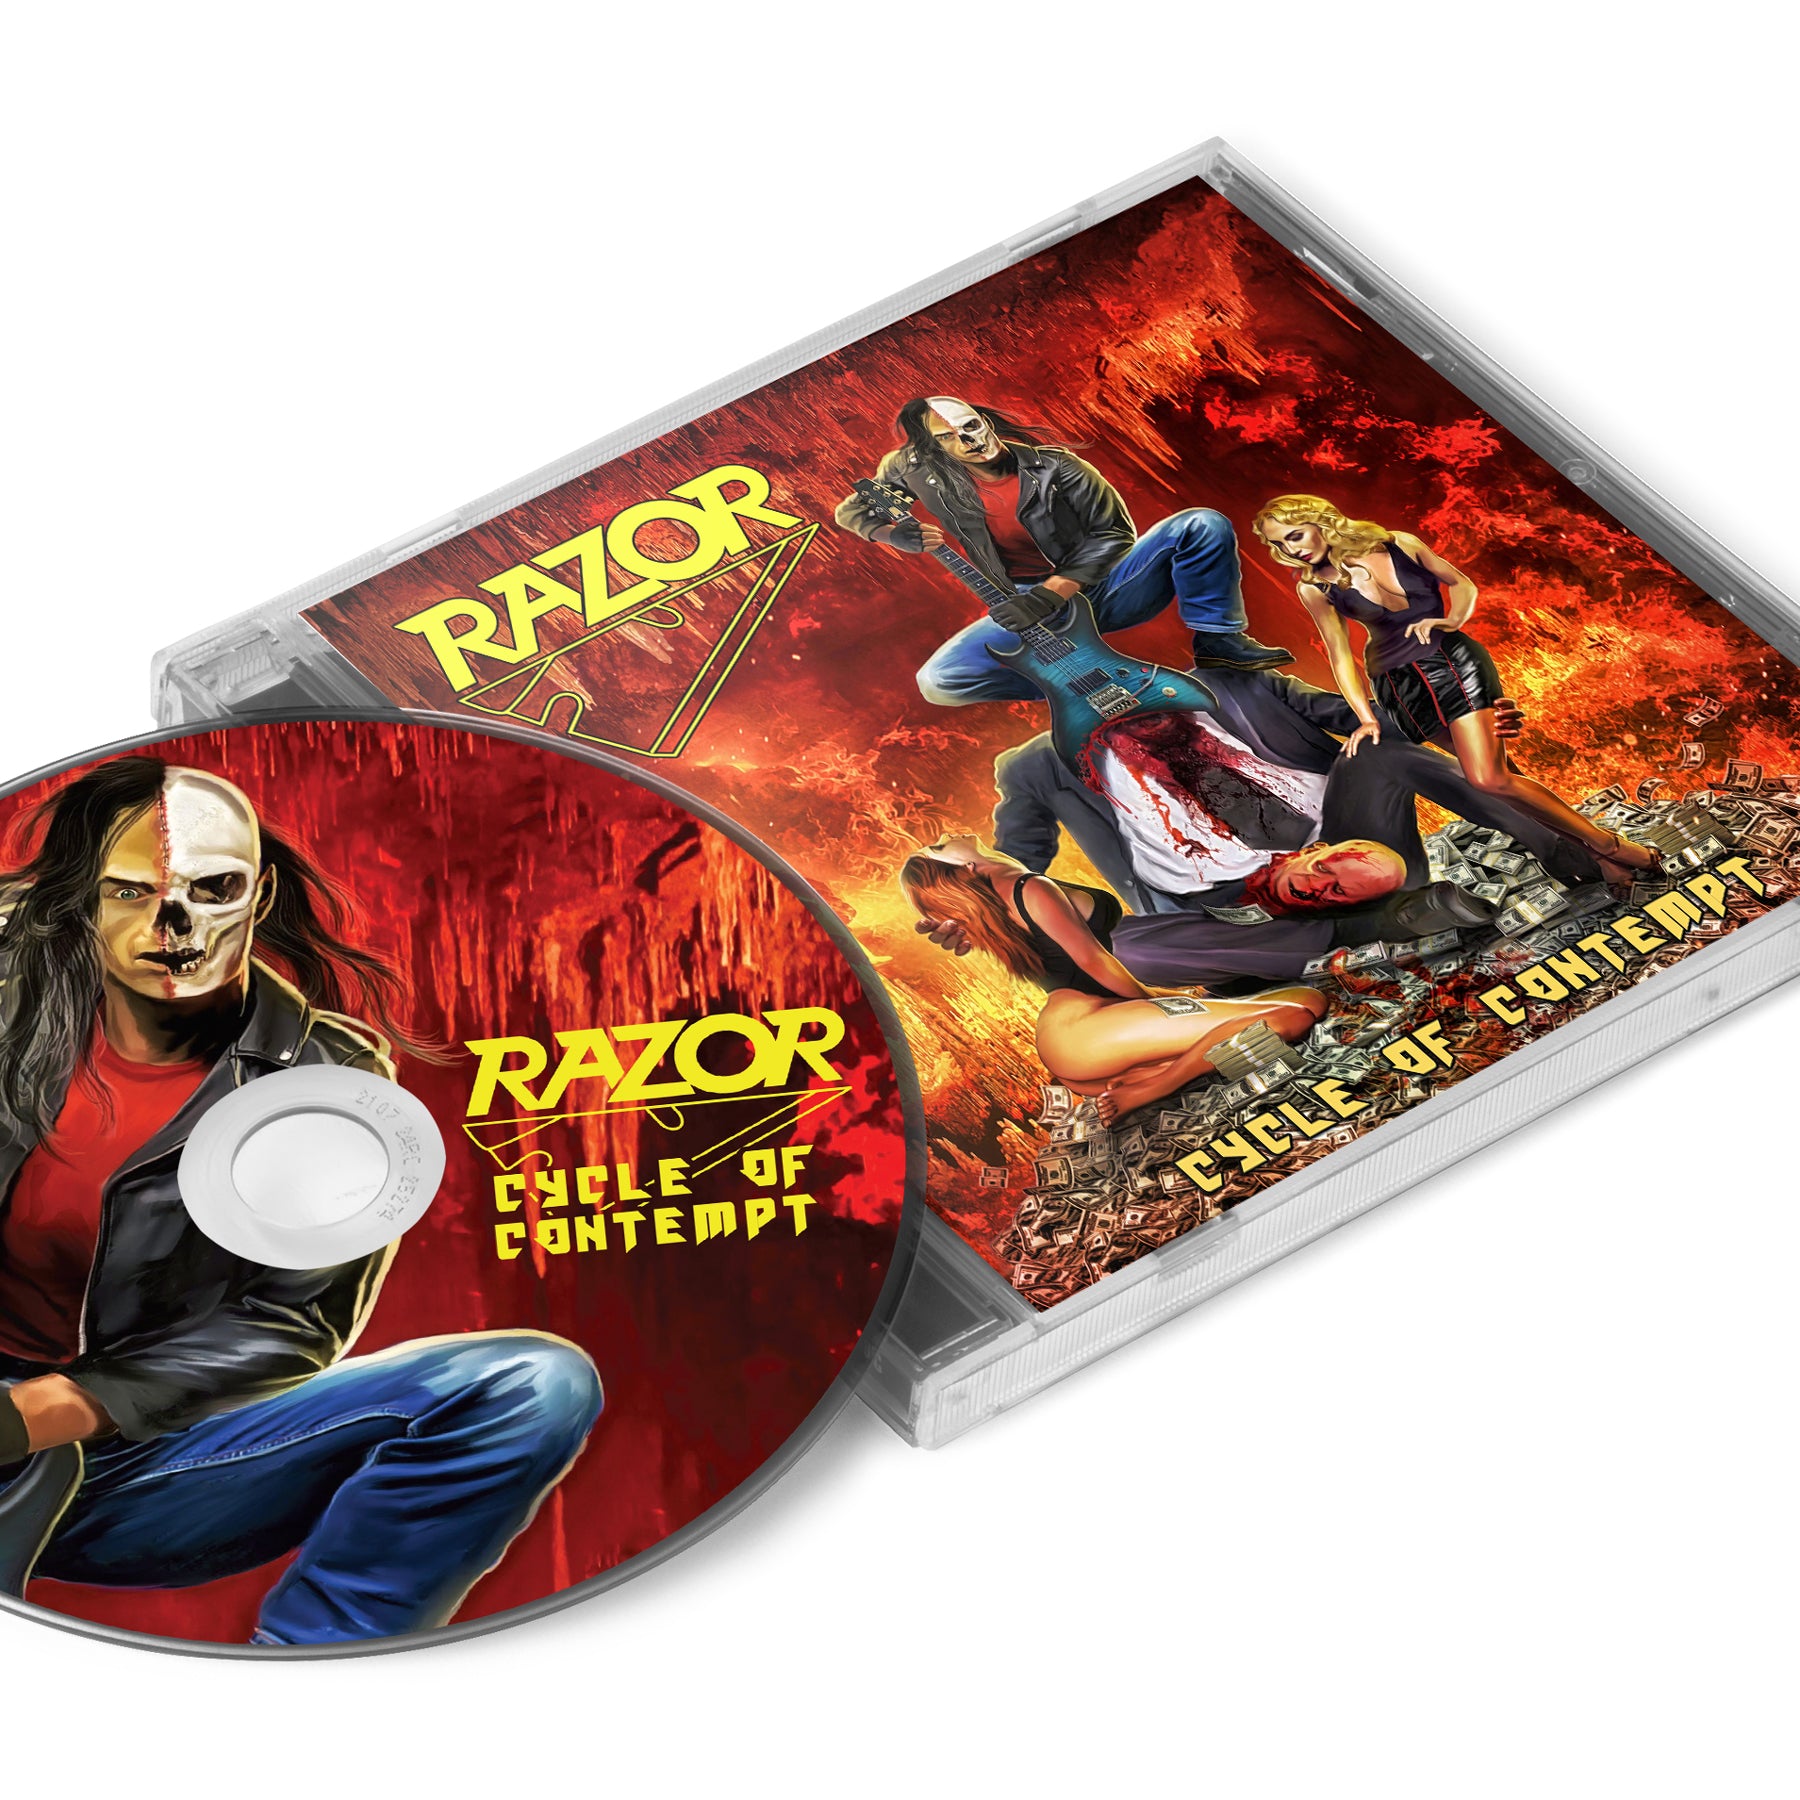 Razor "Cycle of Contempt" CD